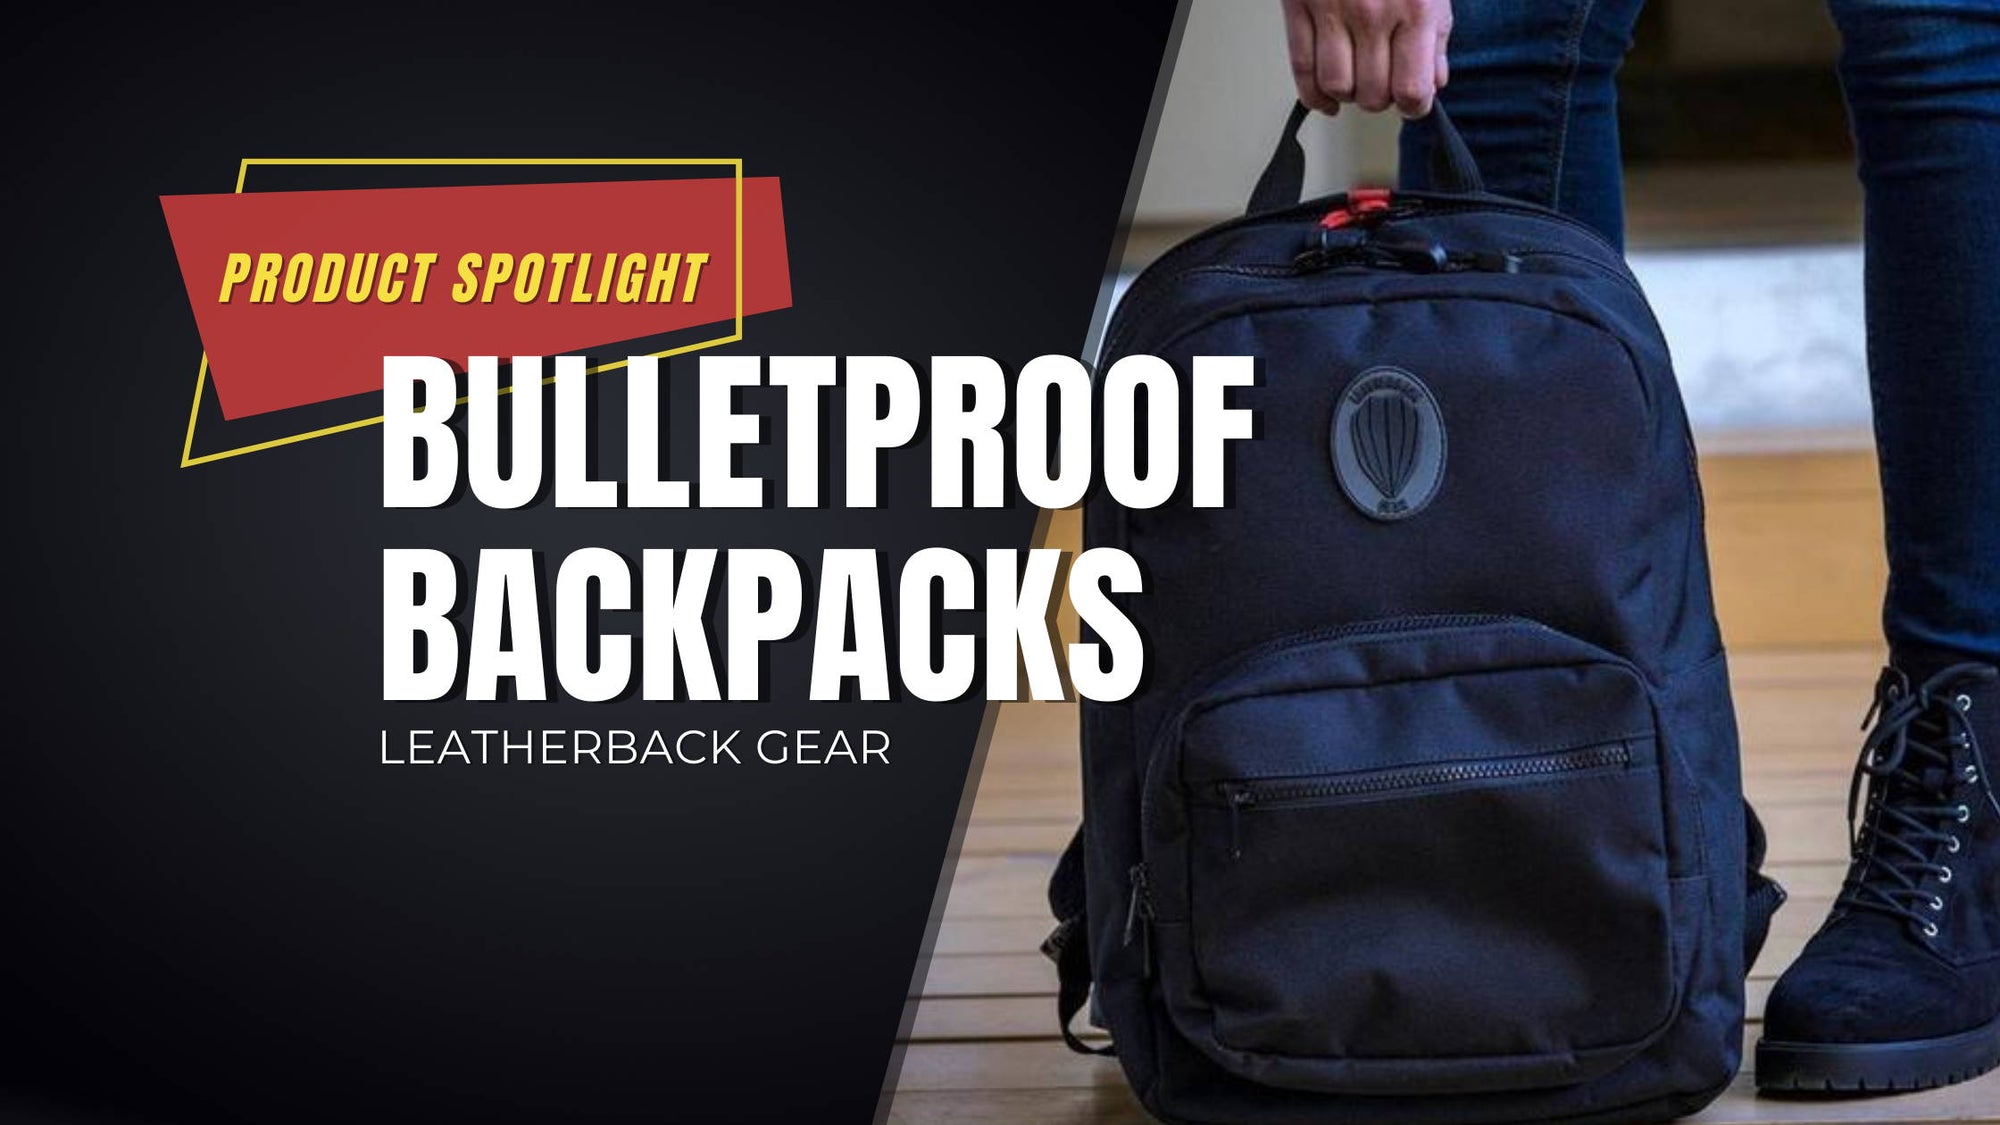 Product Spotlight: Bulletproof Backpacks By Leatherback Gear